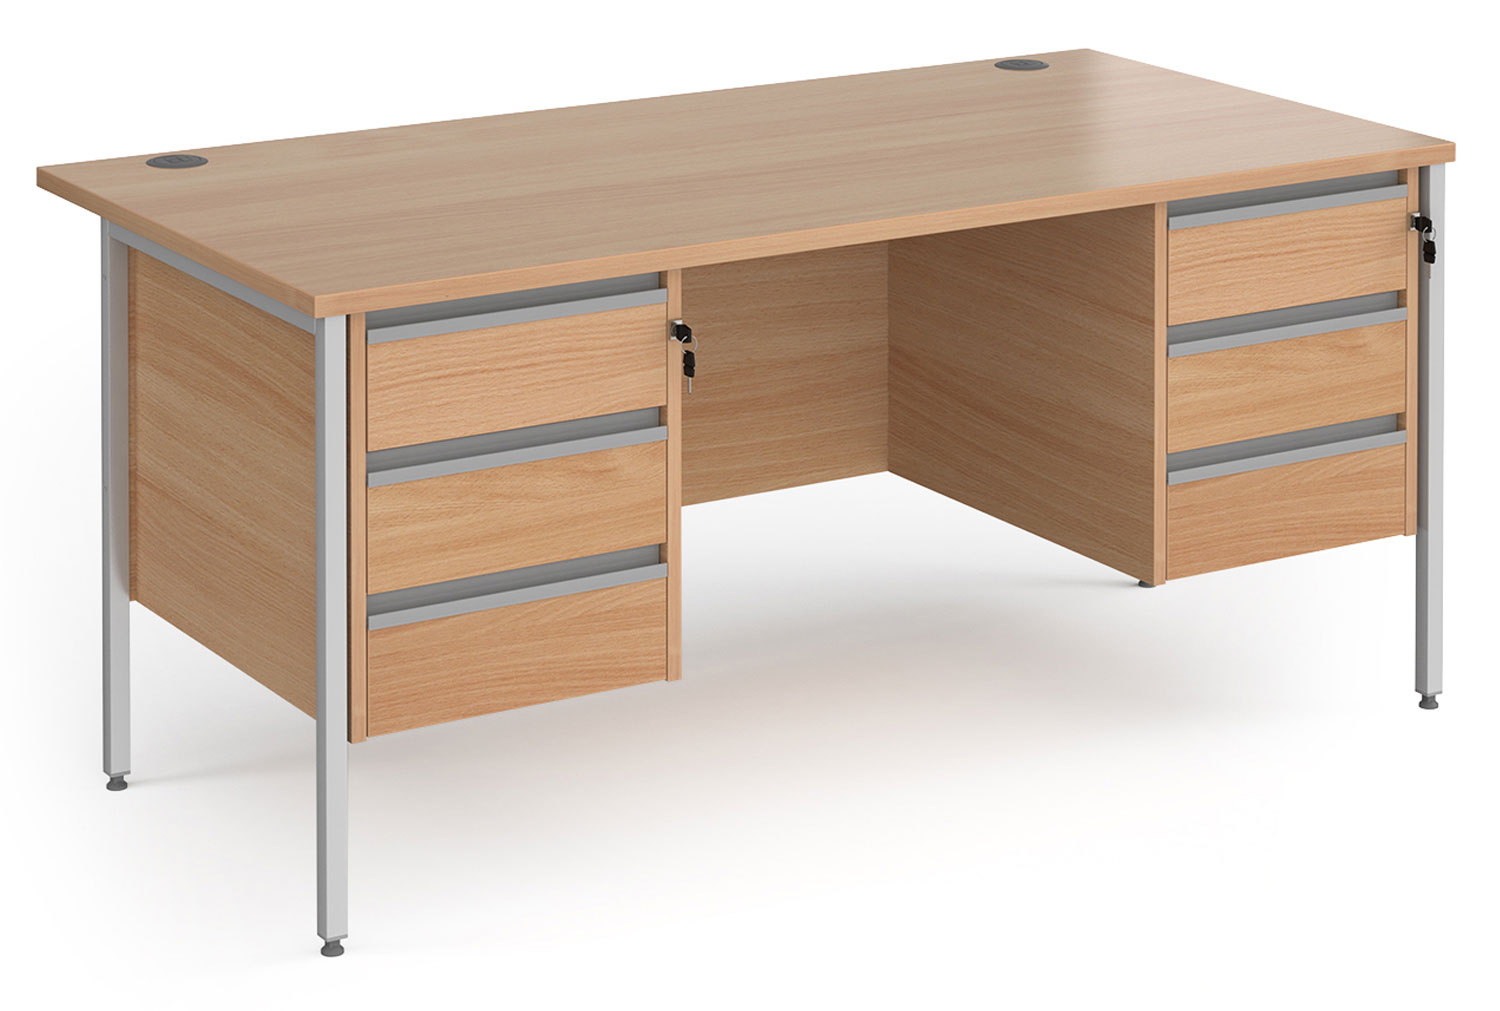 Value Line Classic+ Rectangular H-Leg Office Desk 3+3 Drawers (Silver Leg), 160wx80dx73h (cm), Beech